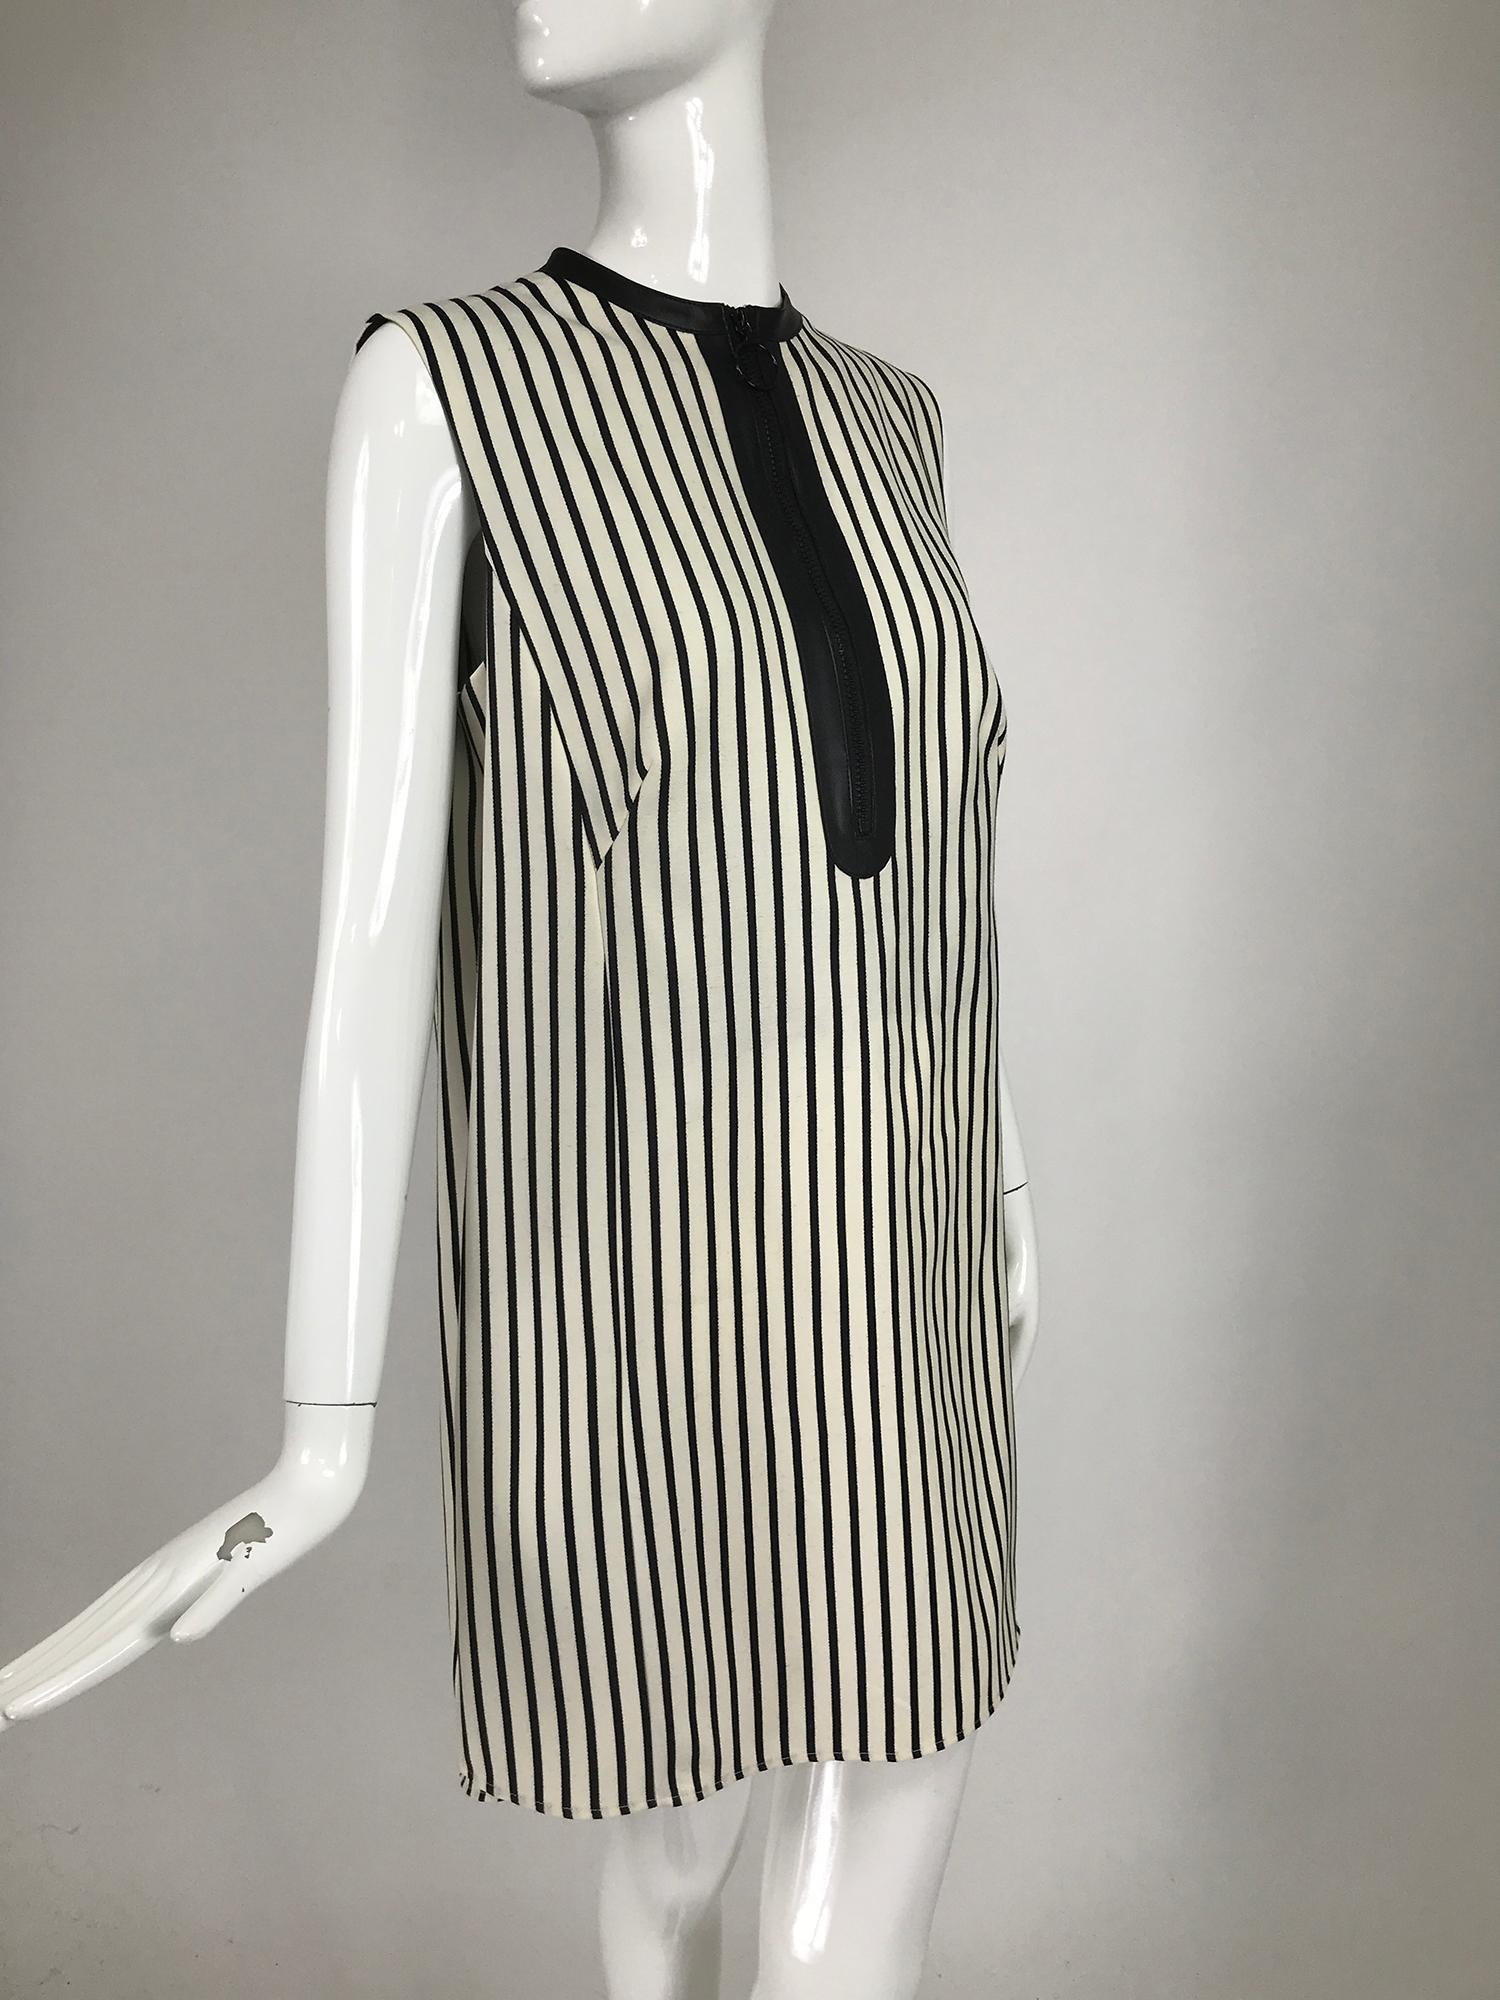 Women's Akris Punto Black and White Stripe Zipper Front Tunic